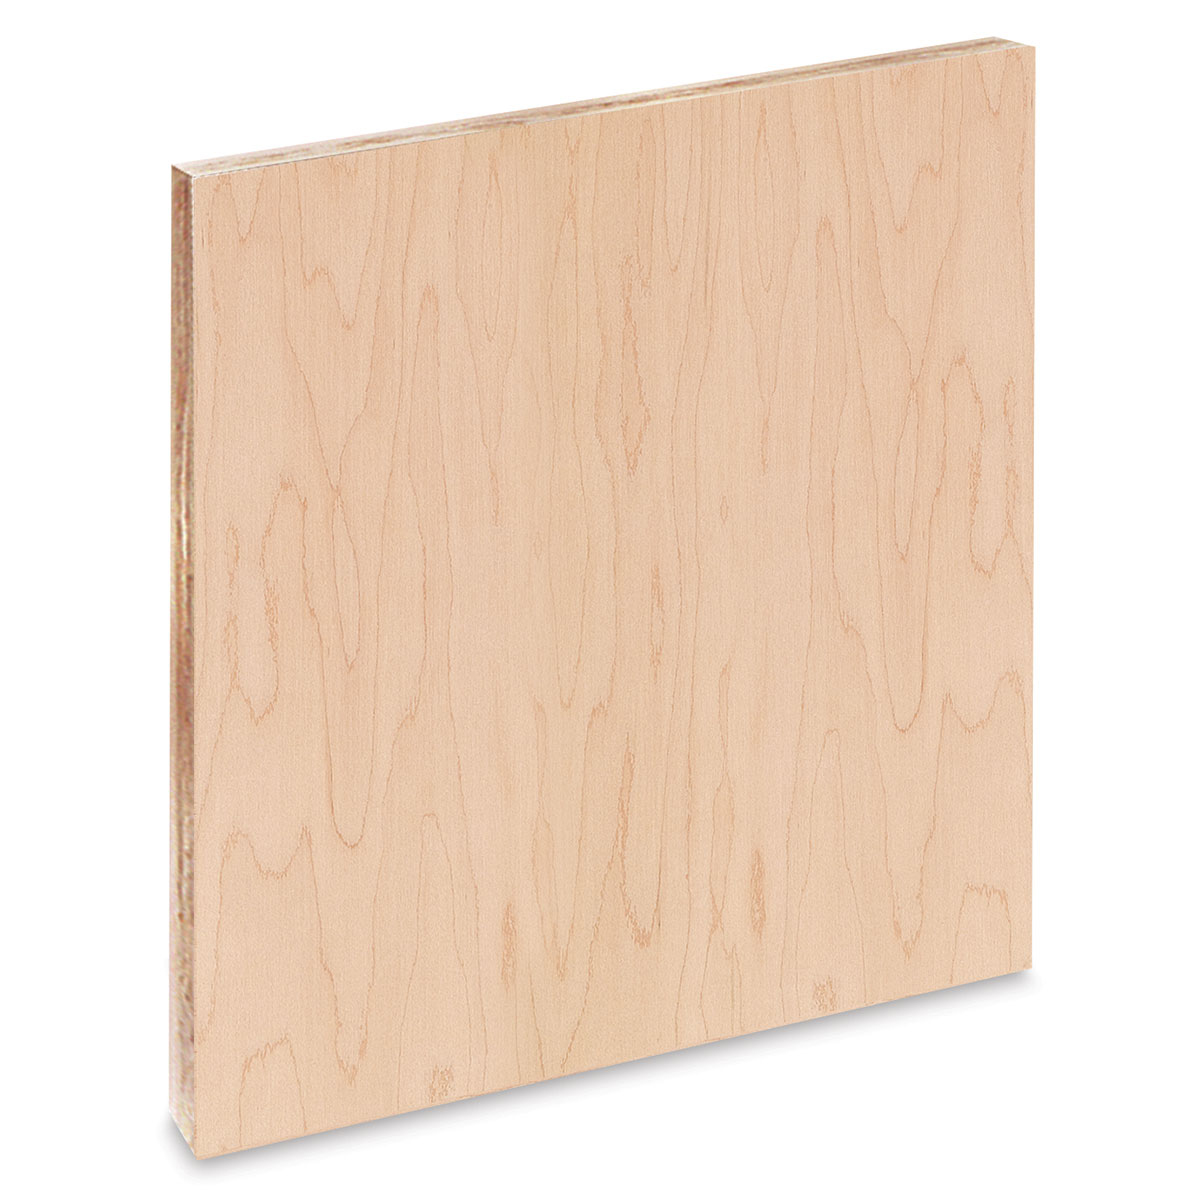 Art Boards Uncradled Natural Maple Panel